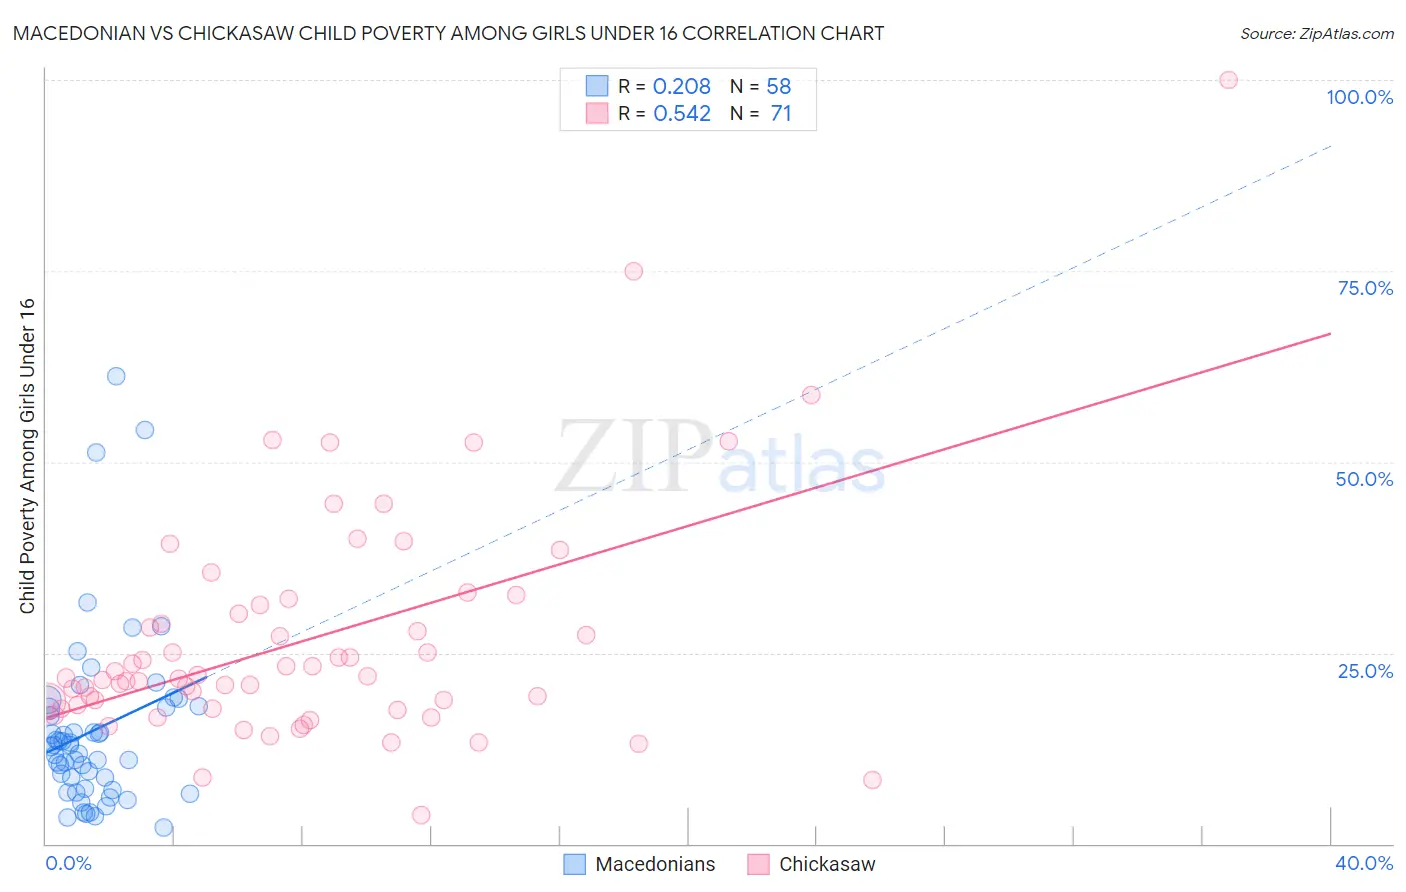 Macedonian vs Chickasaw Child Poverty Among Girls Under 16